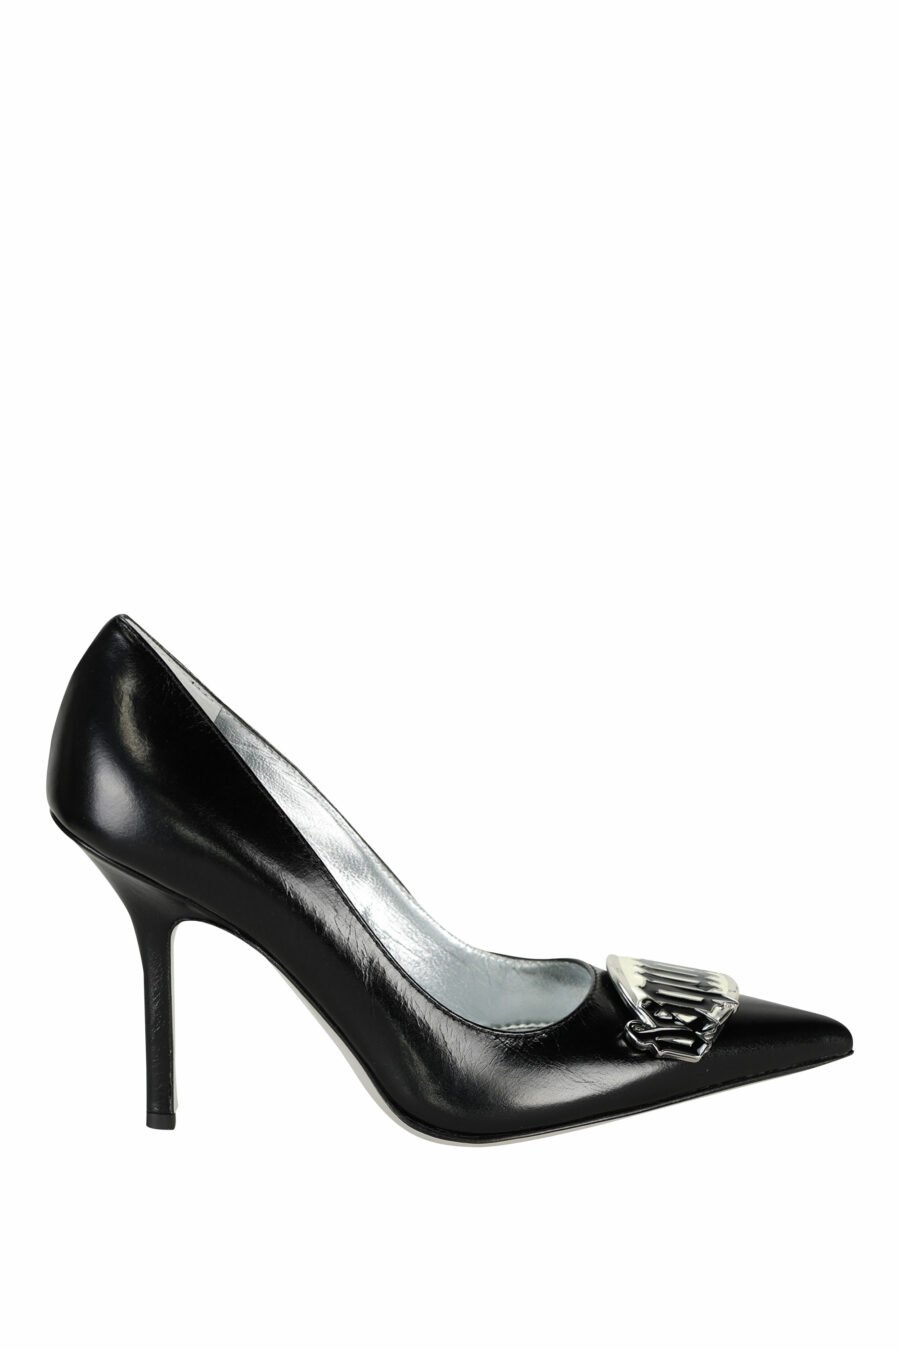 Black heels with silver metal logo - 8055777298886